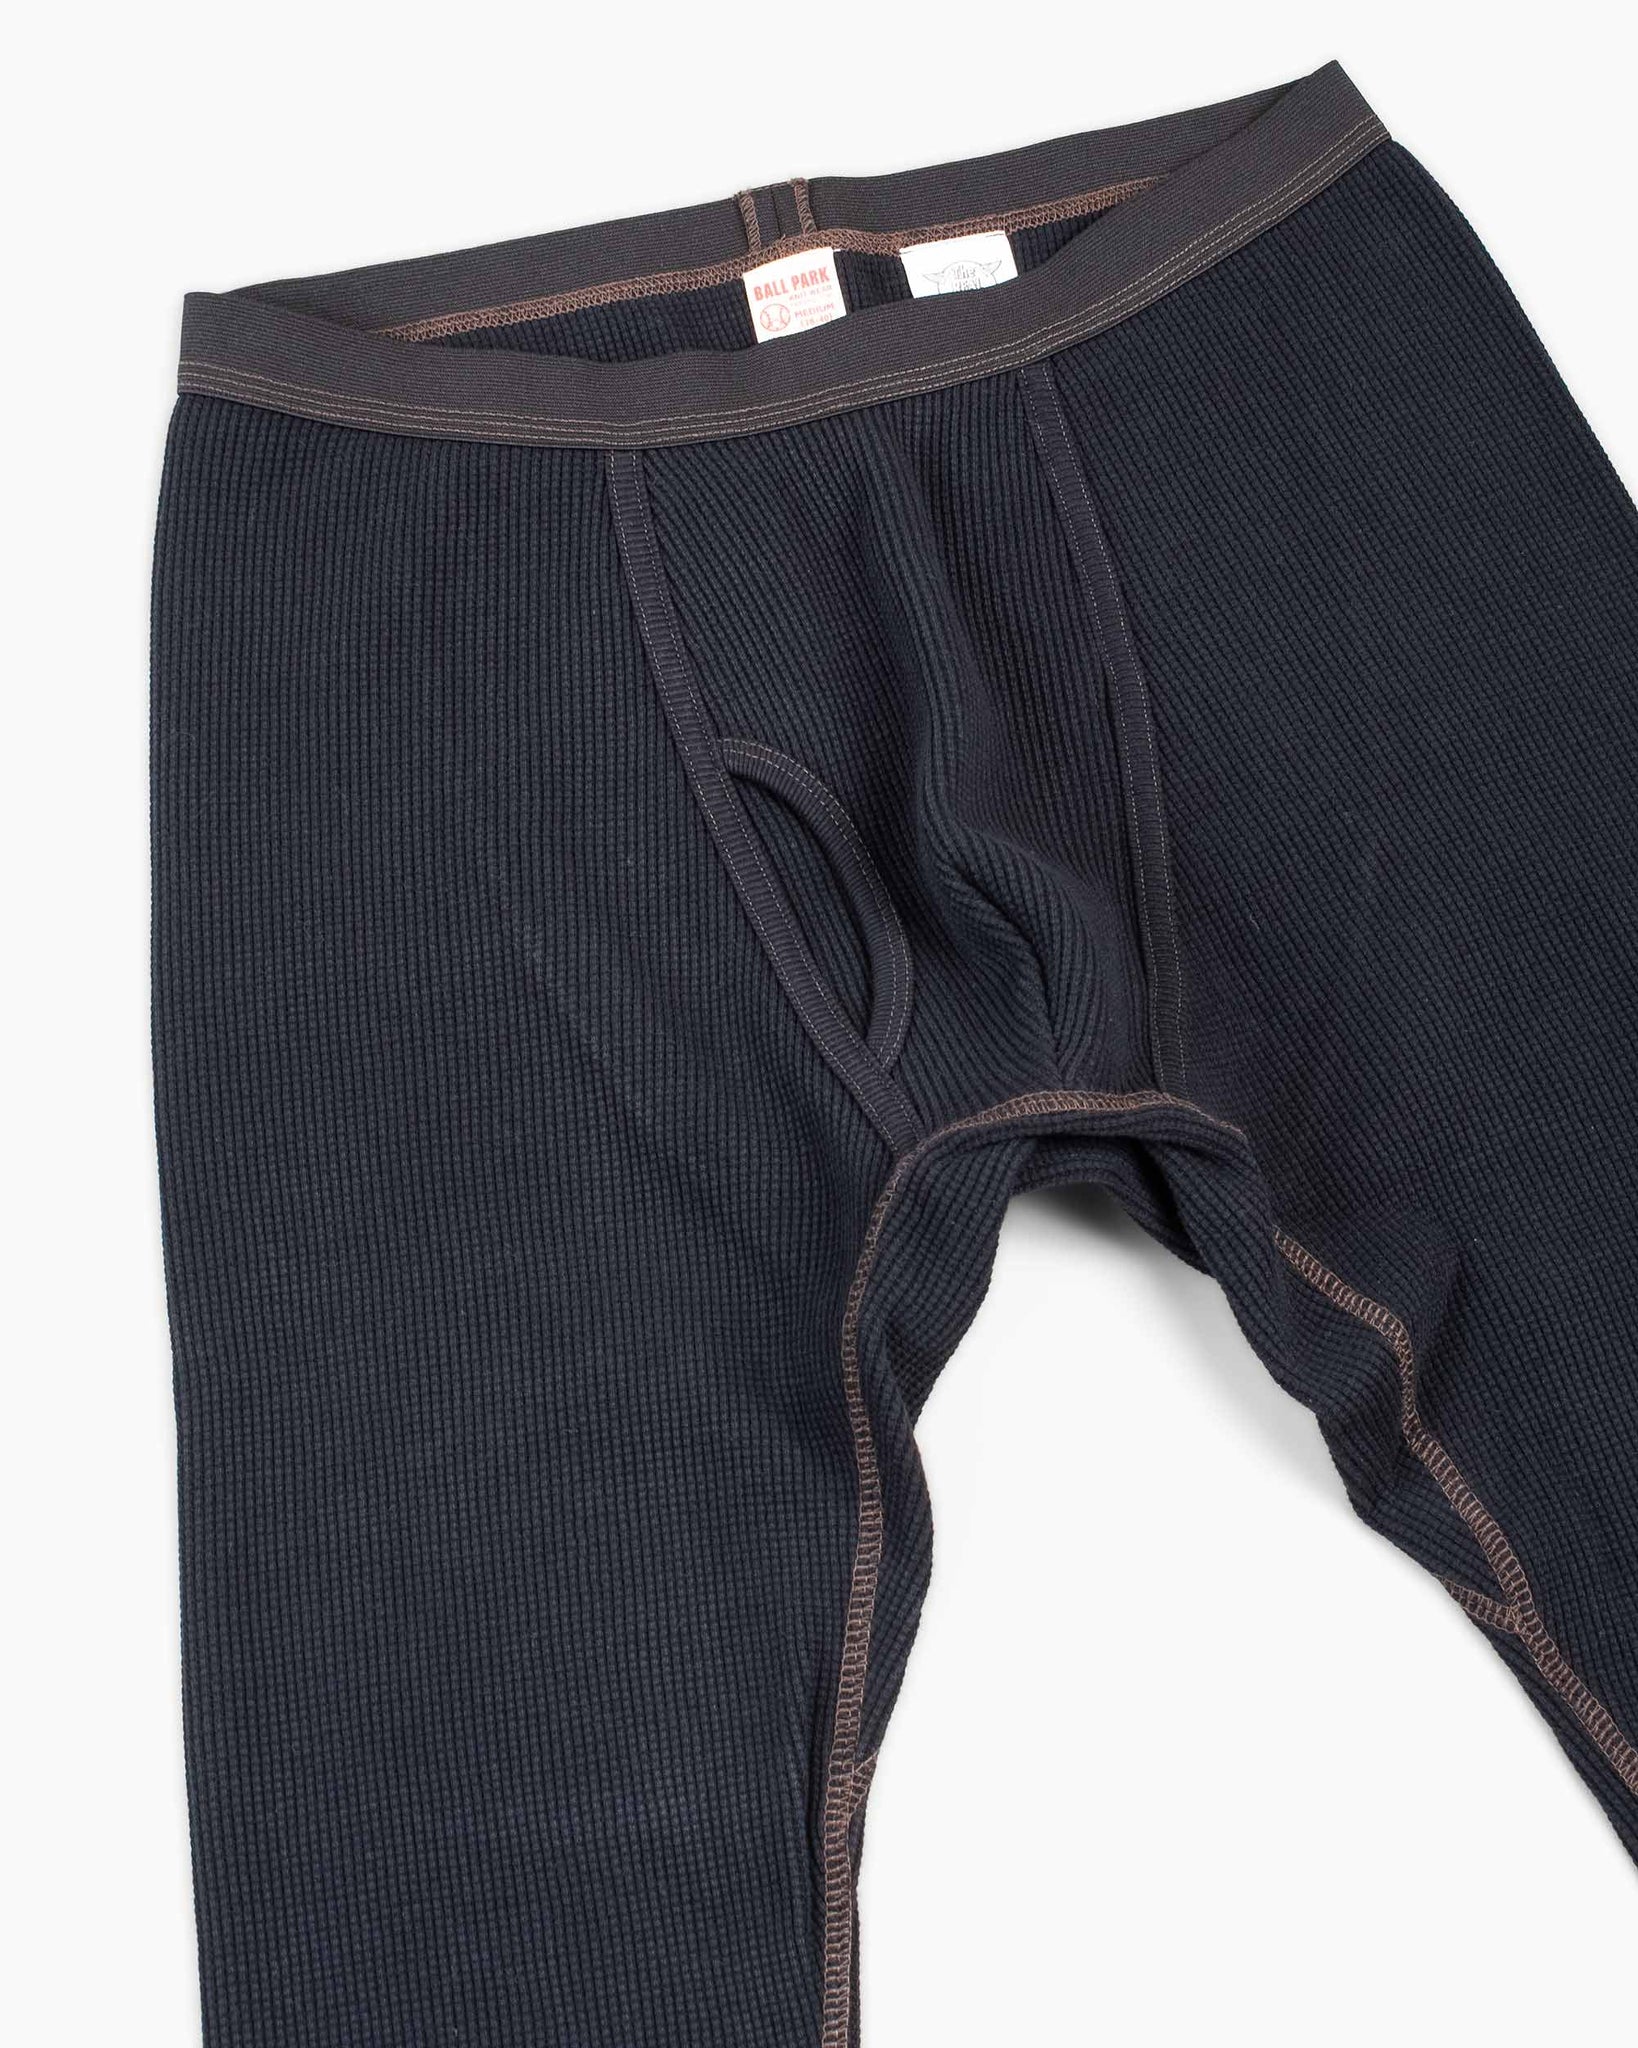 Real McCoy's Athletic Underwear Long MA17112